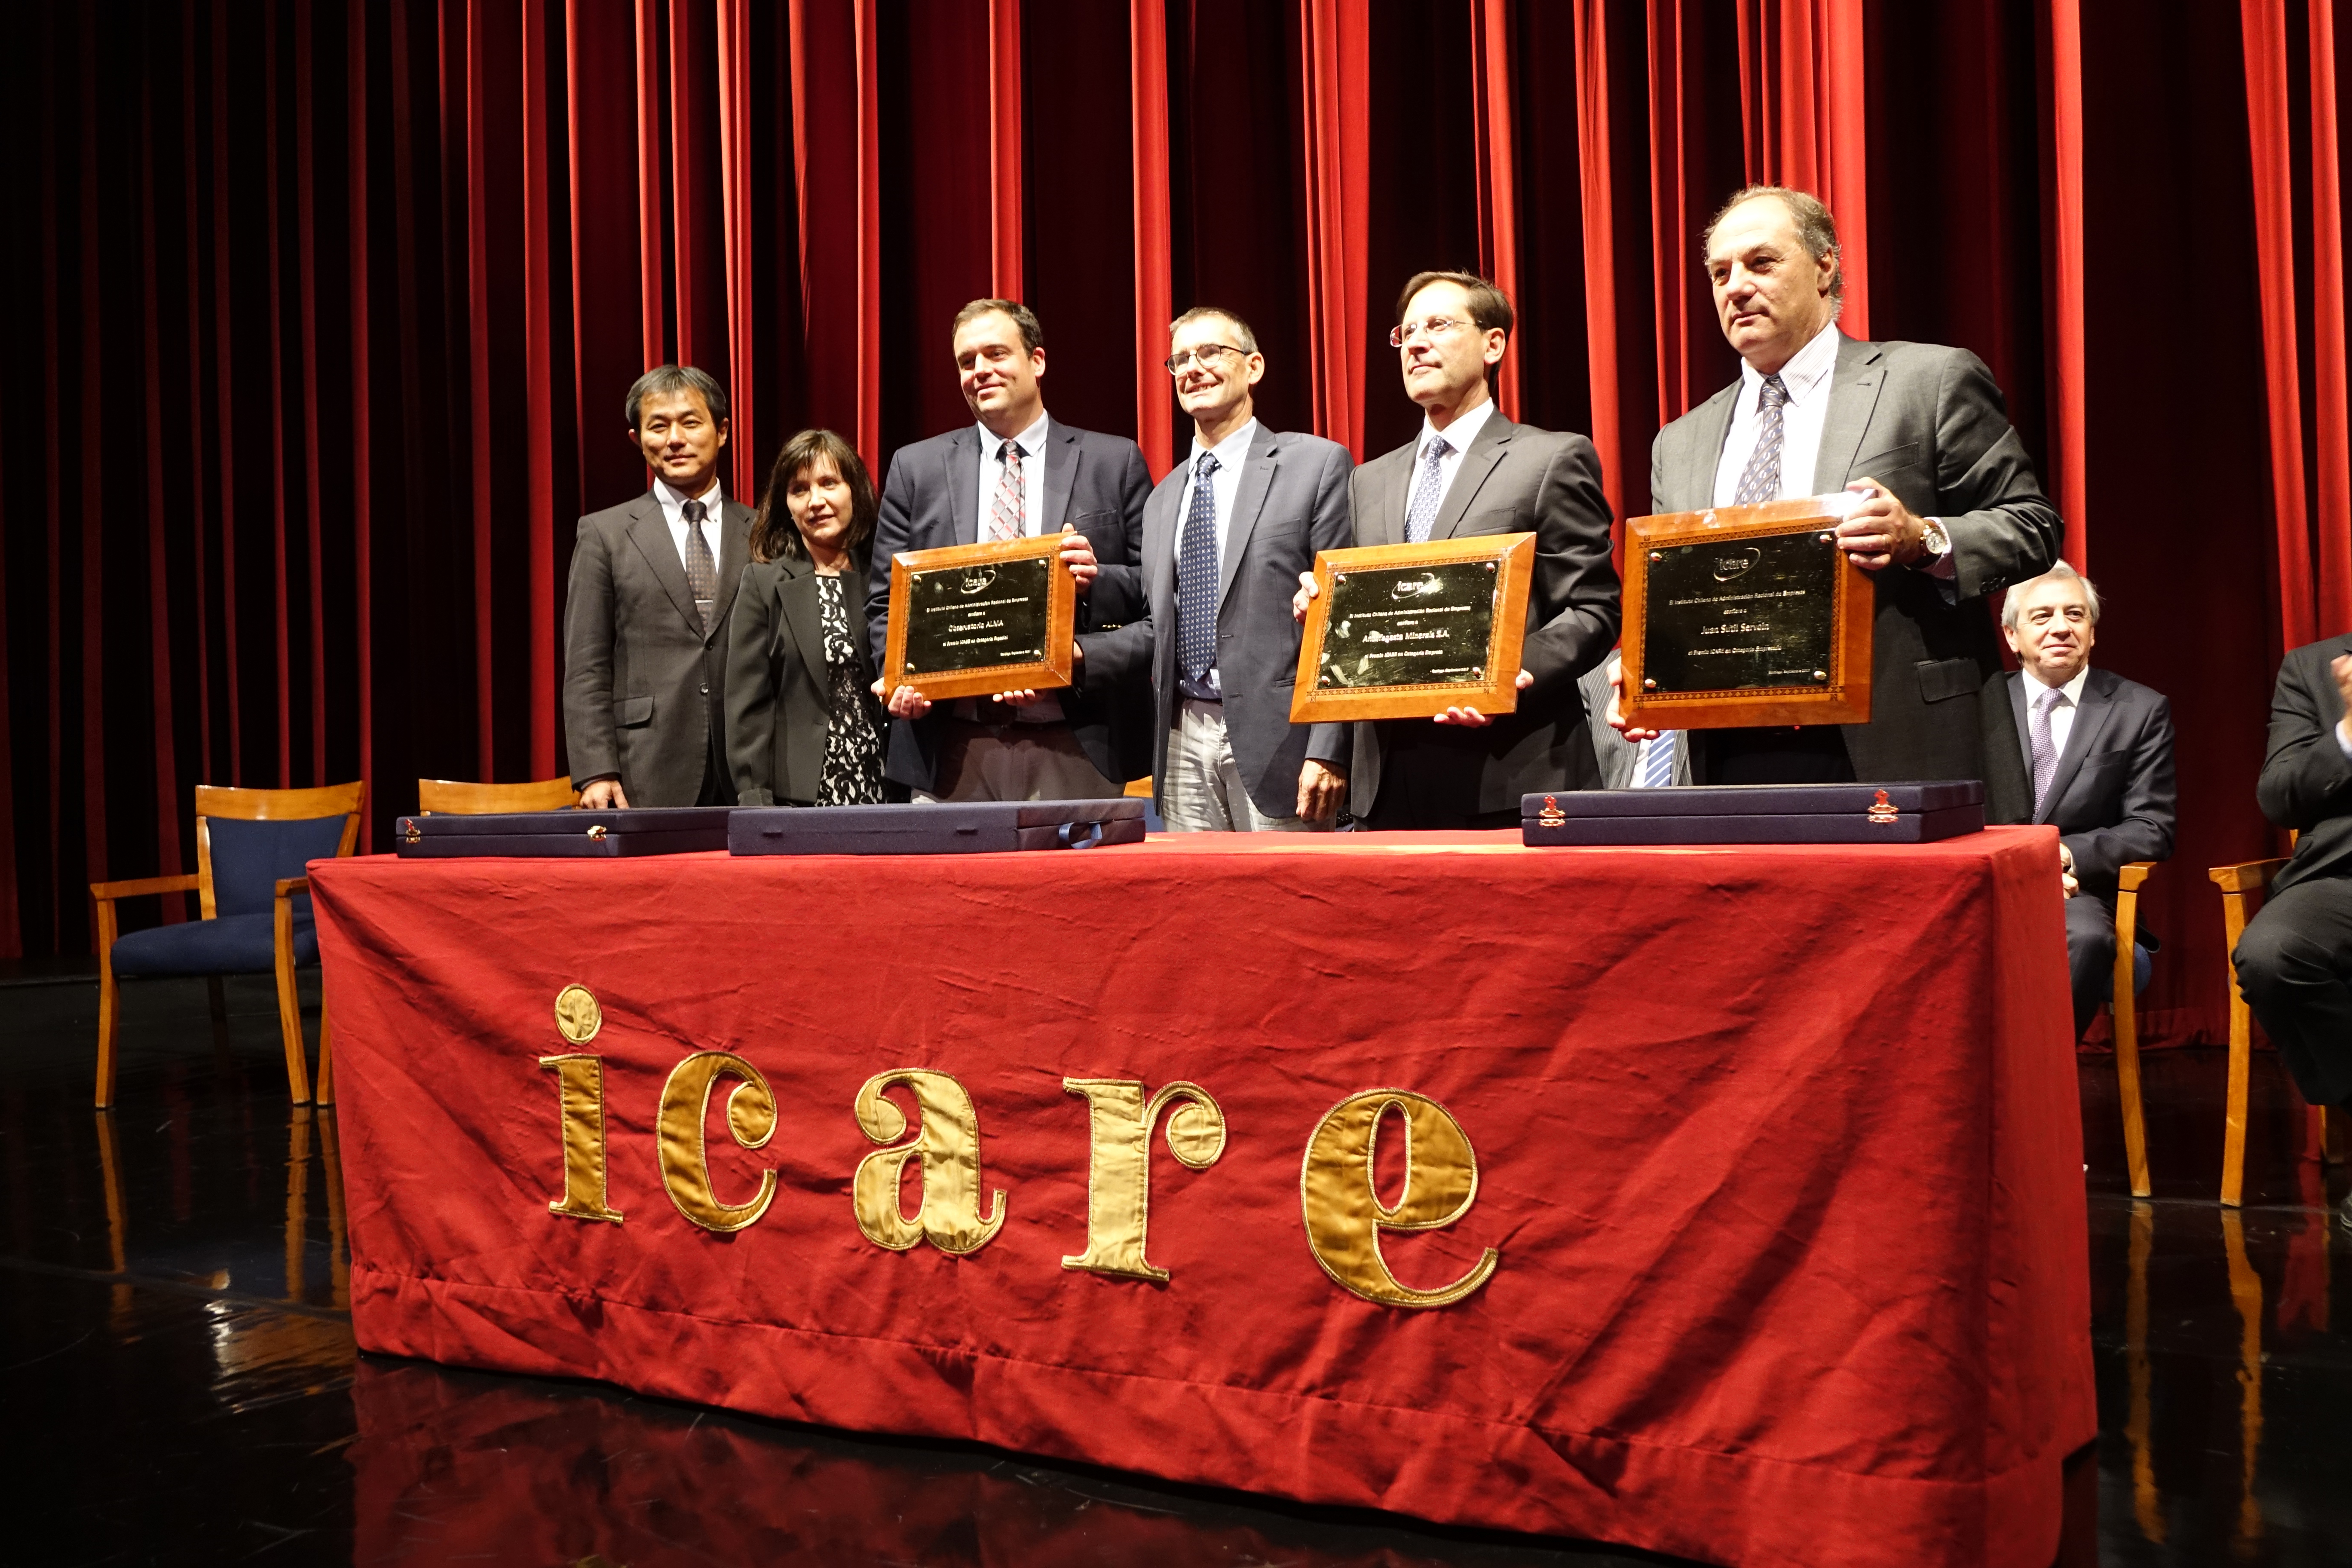 The three winners of the ICARE 2017 Award